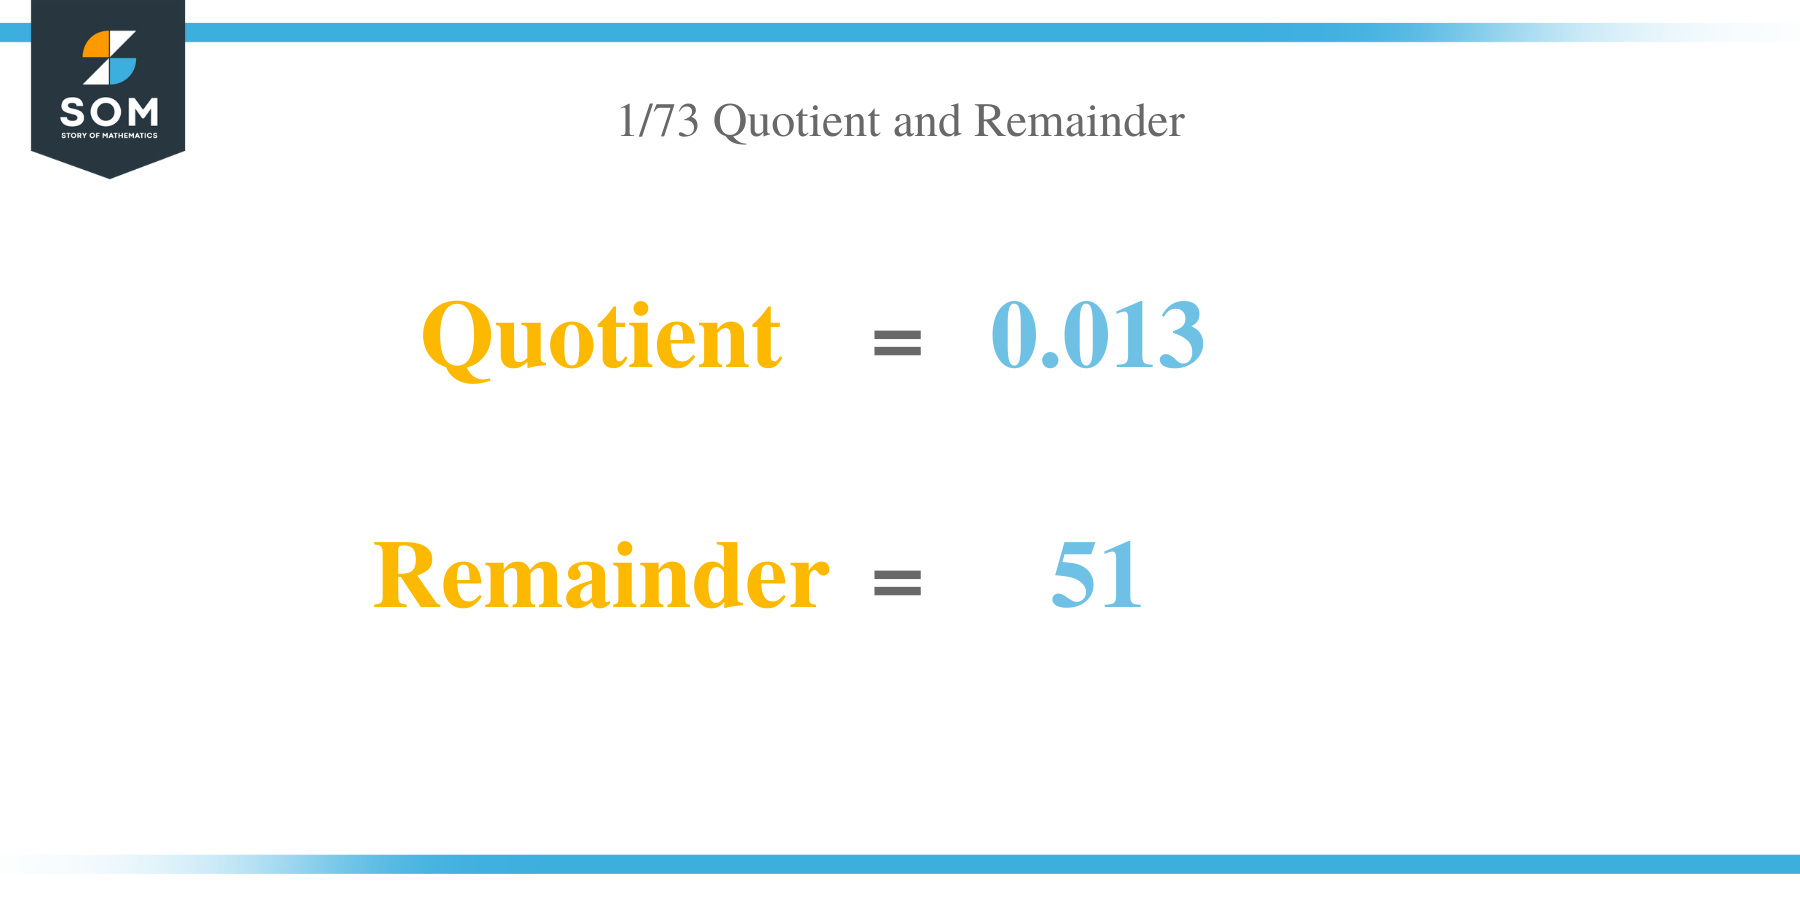 Quotient and Remainder of 1 per 73